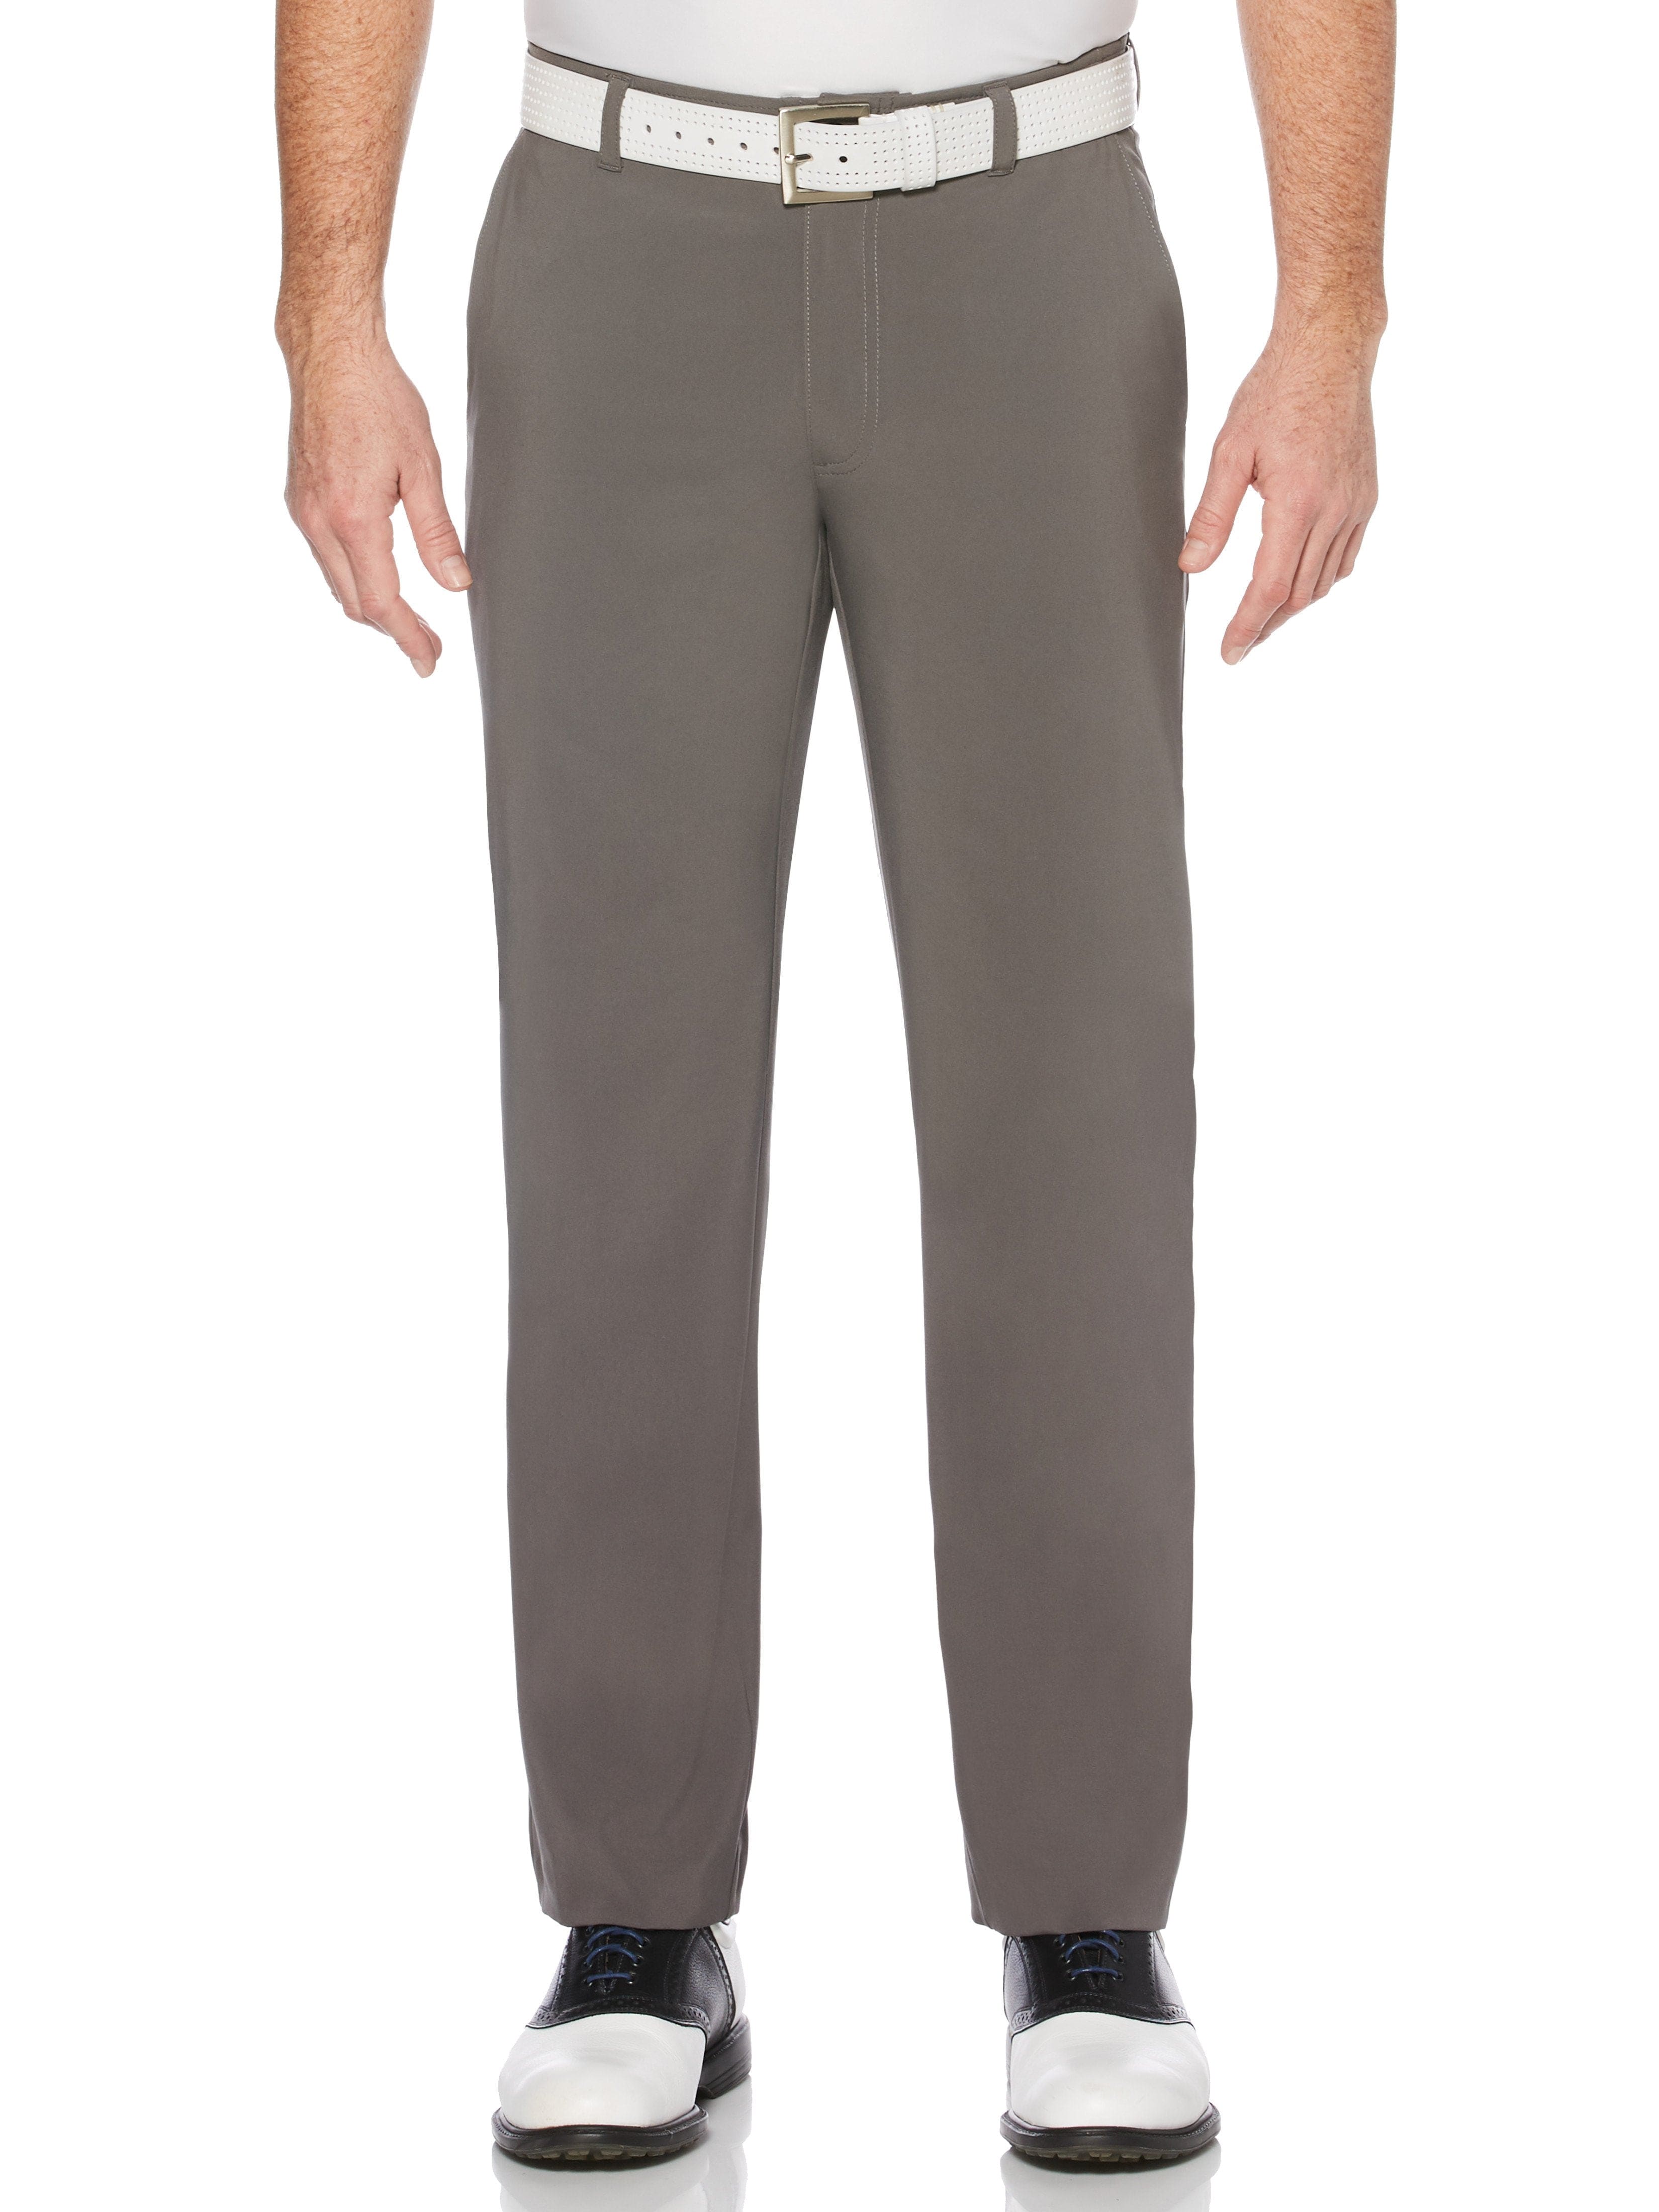 Jack Nicklaus Mens Flat Front Active Flex Pants, Size 32 x 30, Iron Gate Gray, Polyester/Elastane | Golf Apparel Shop